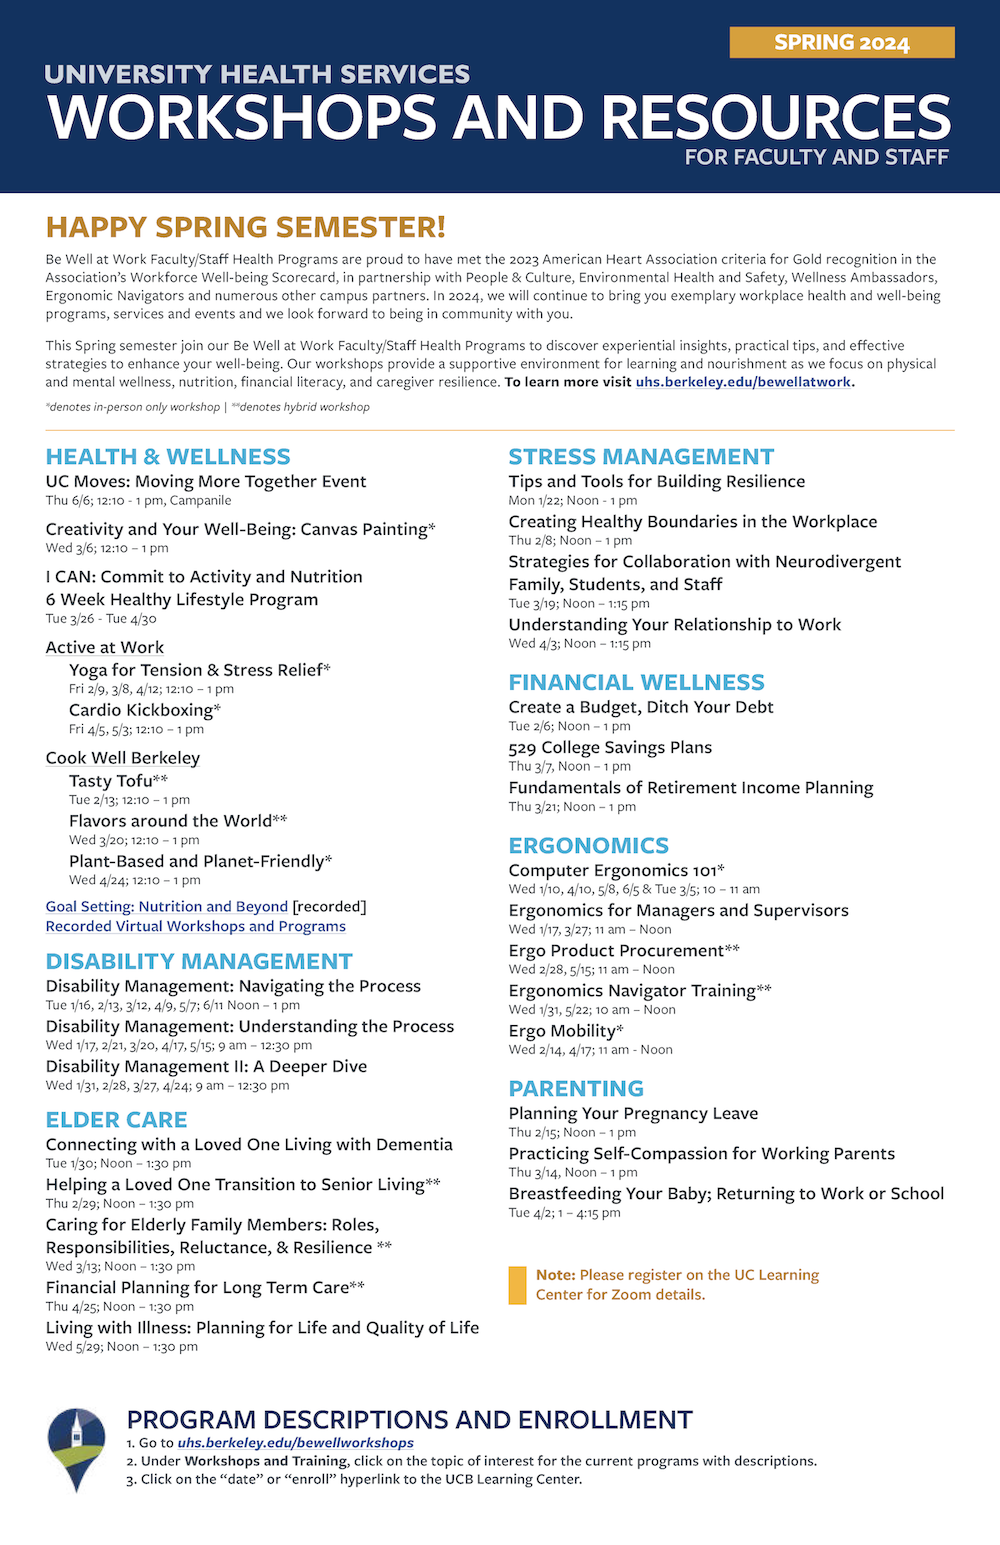 Faculty/Staff Health Programs